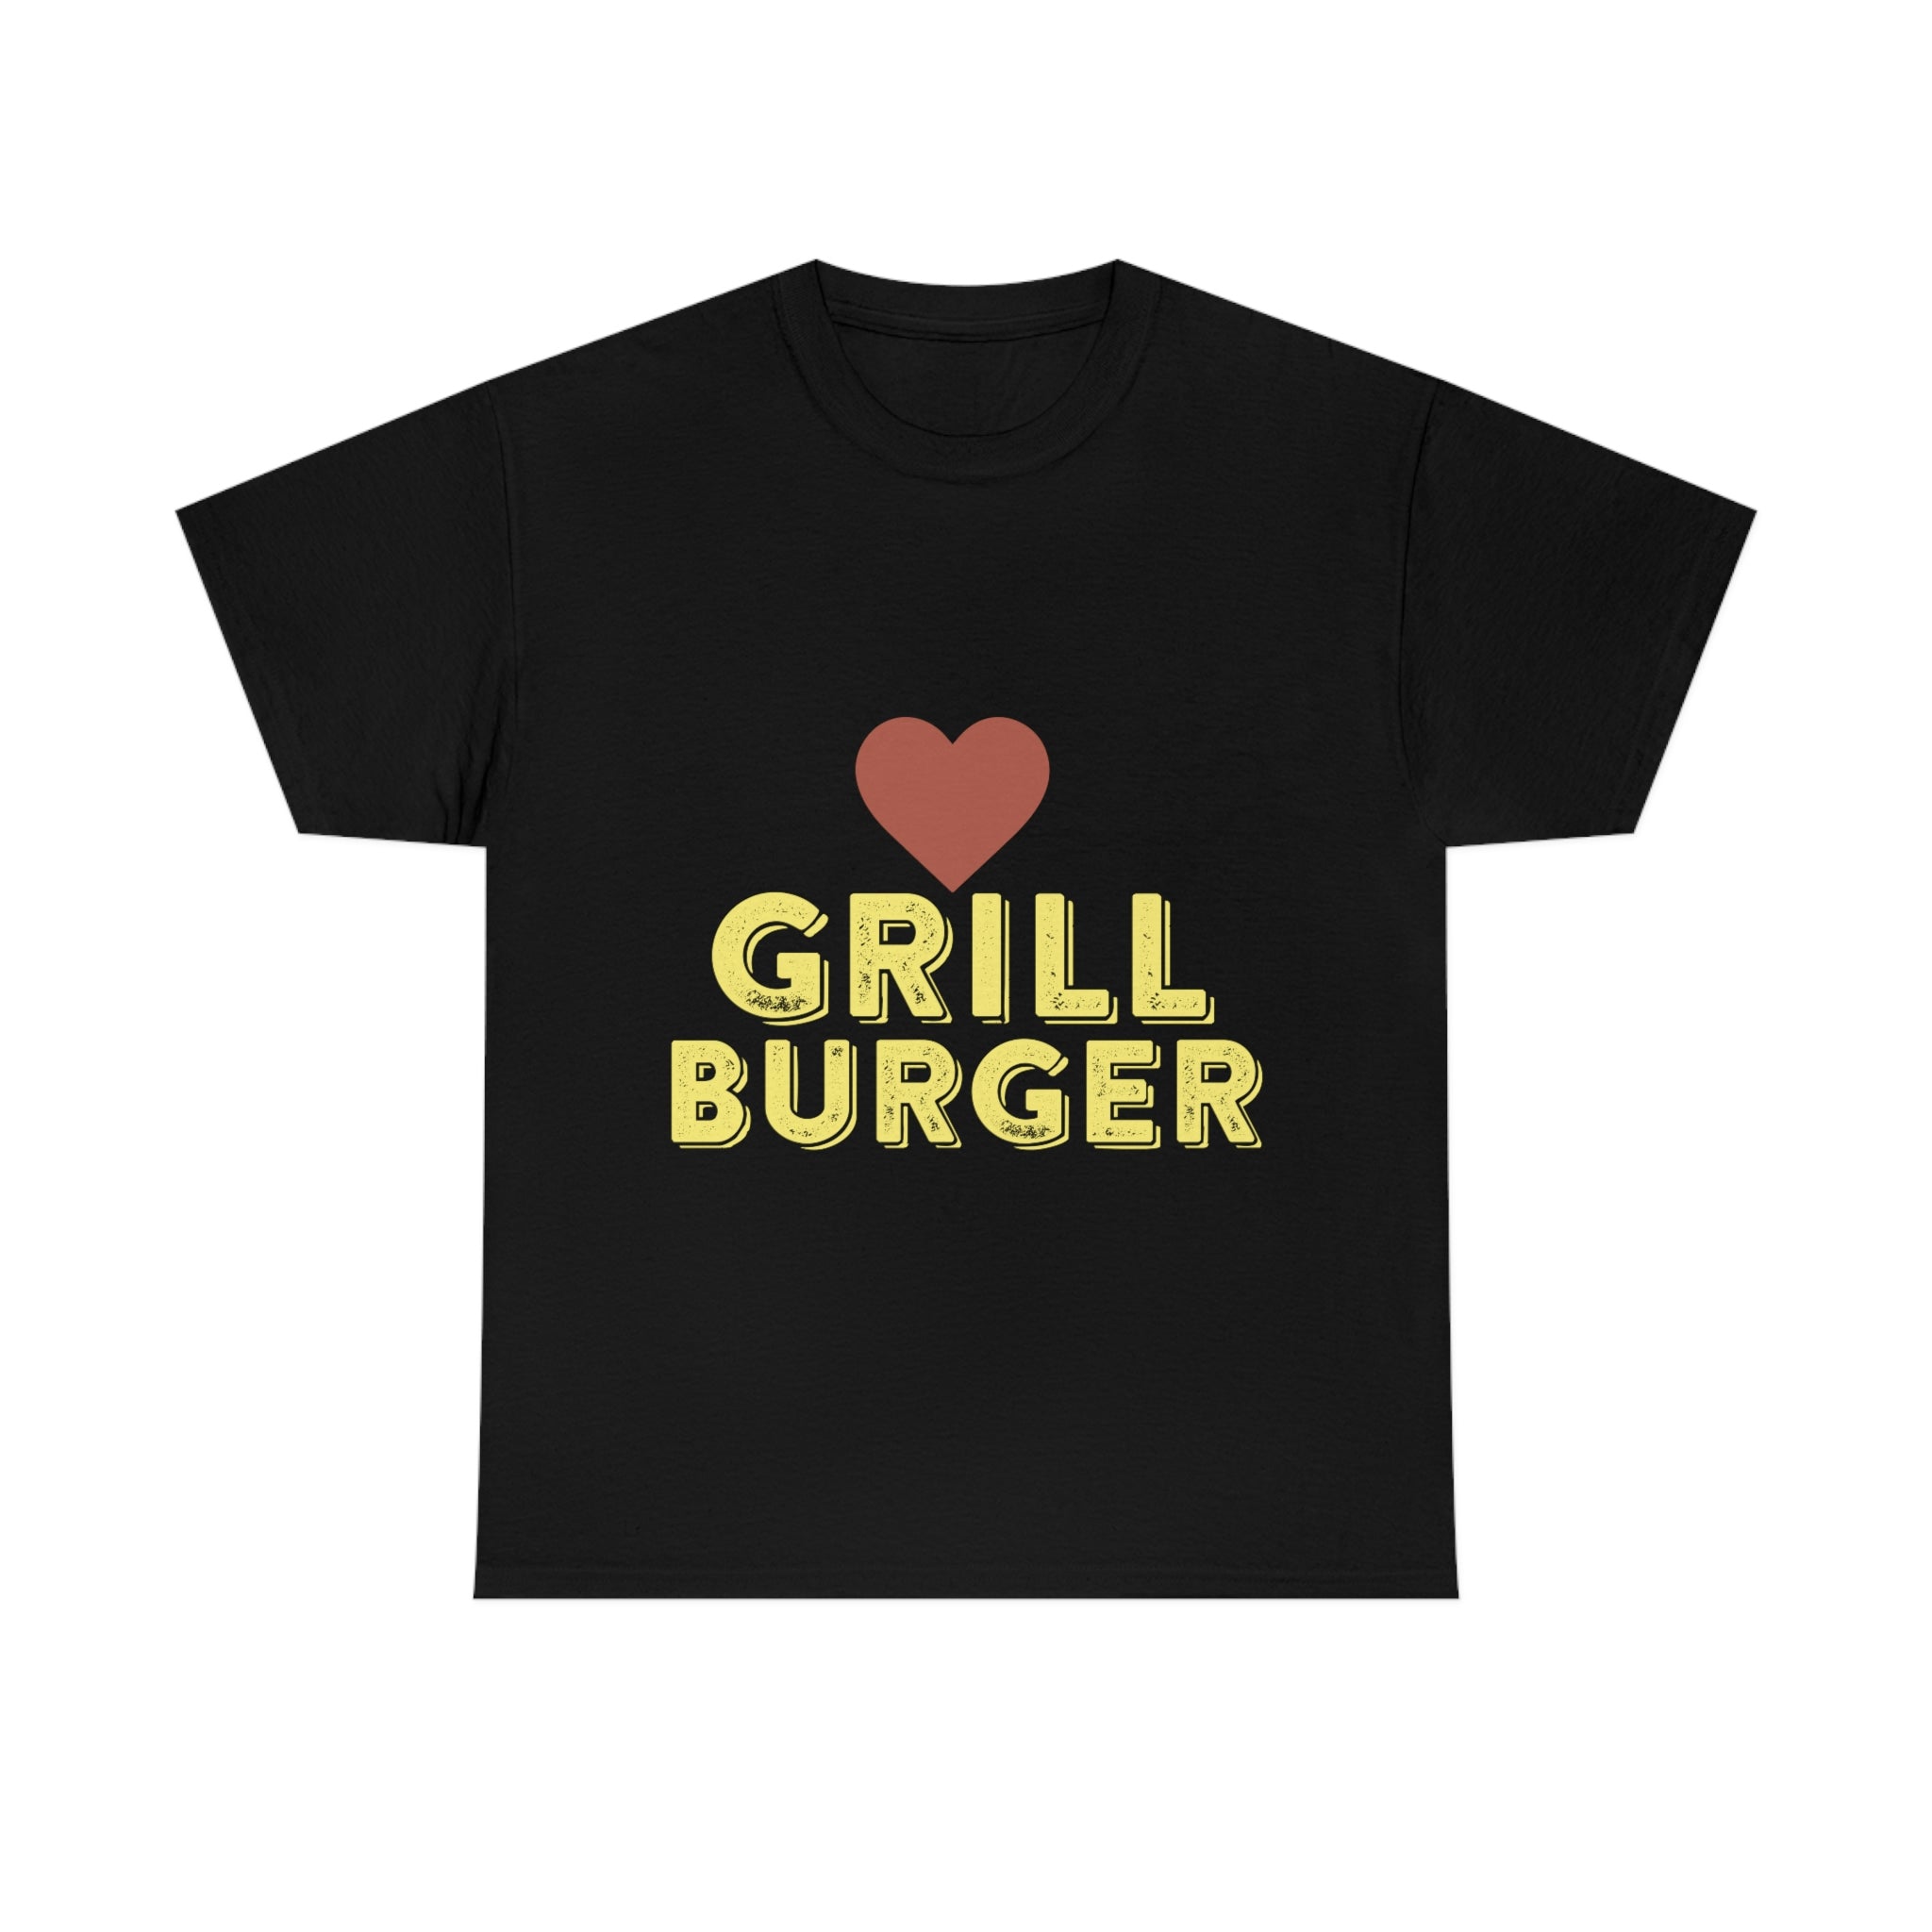 Grill Burger shirt